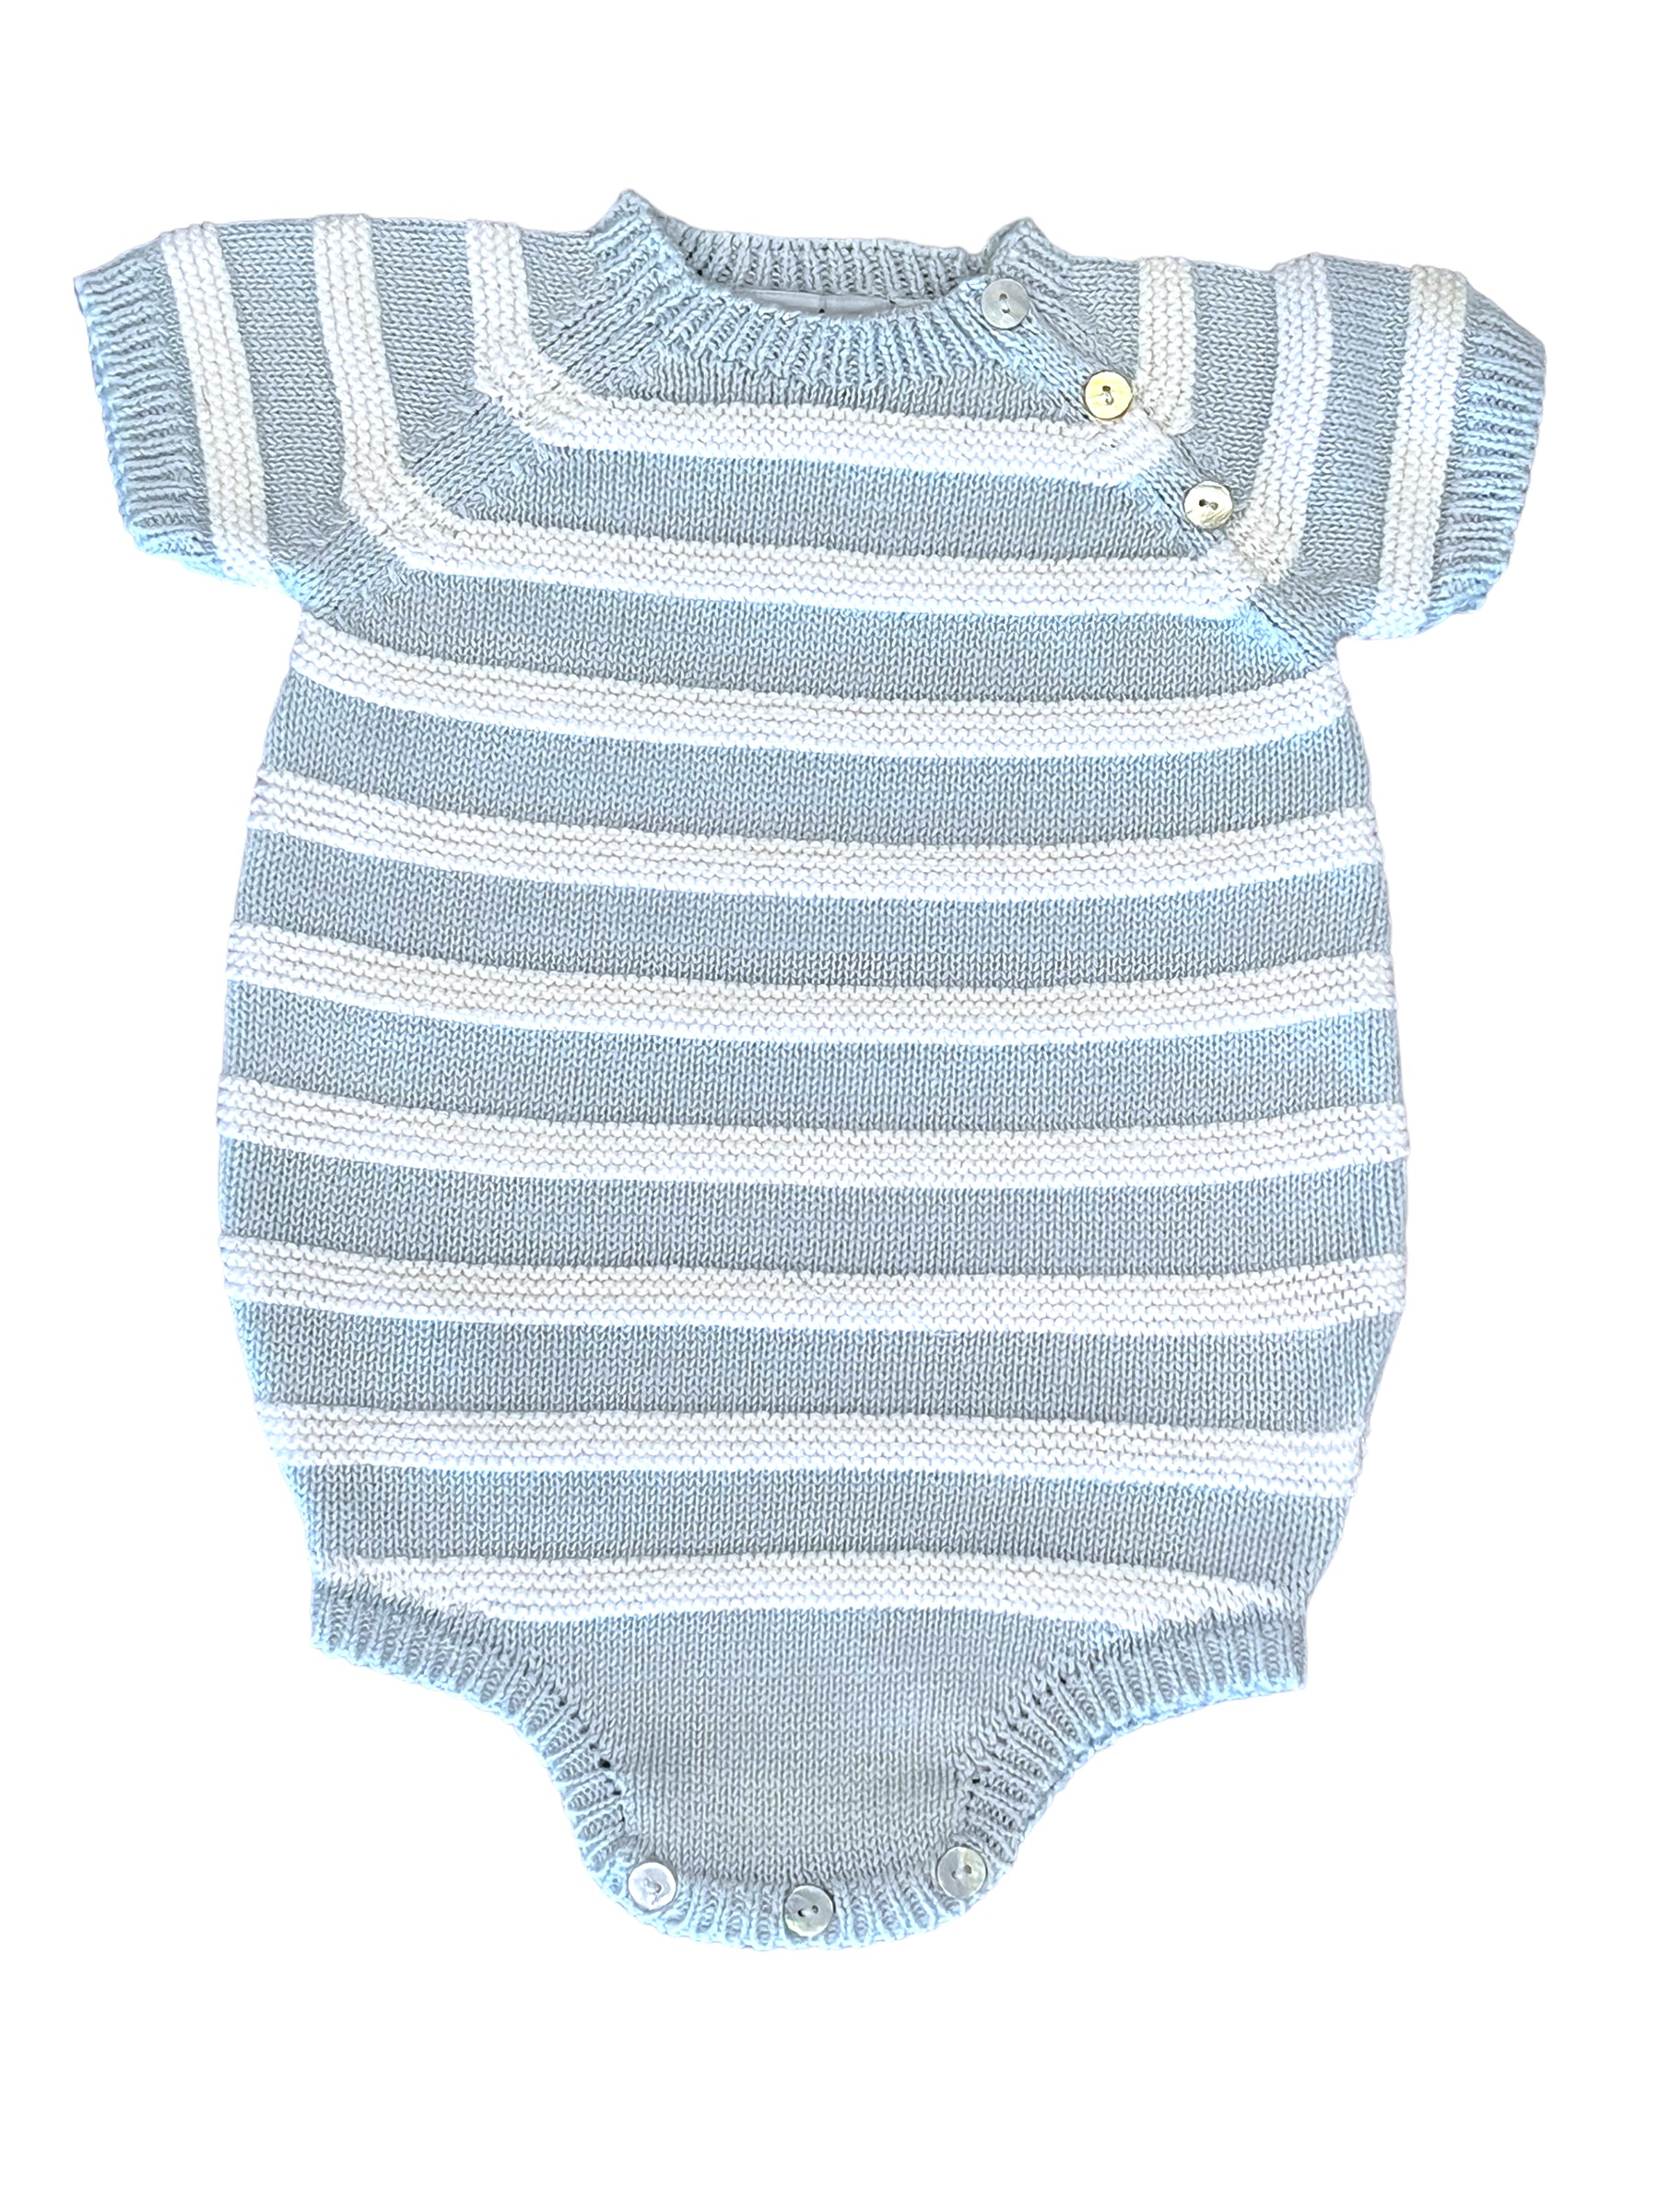 Striped Romper-Blue (Infant)